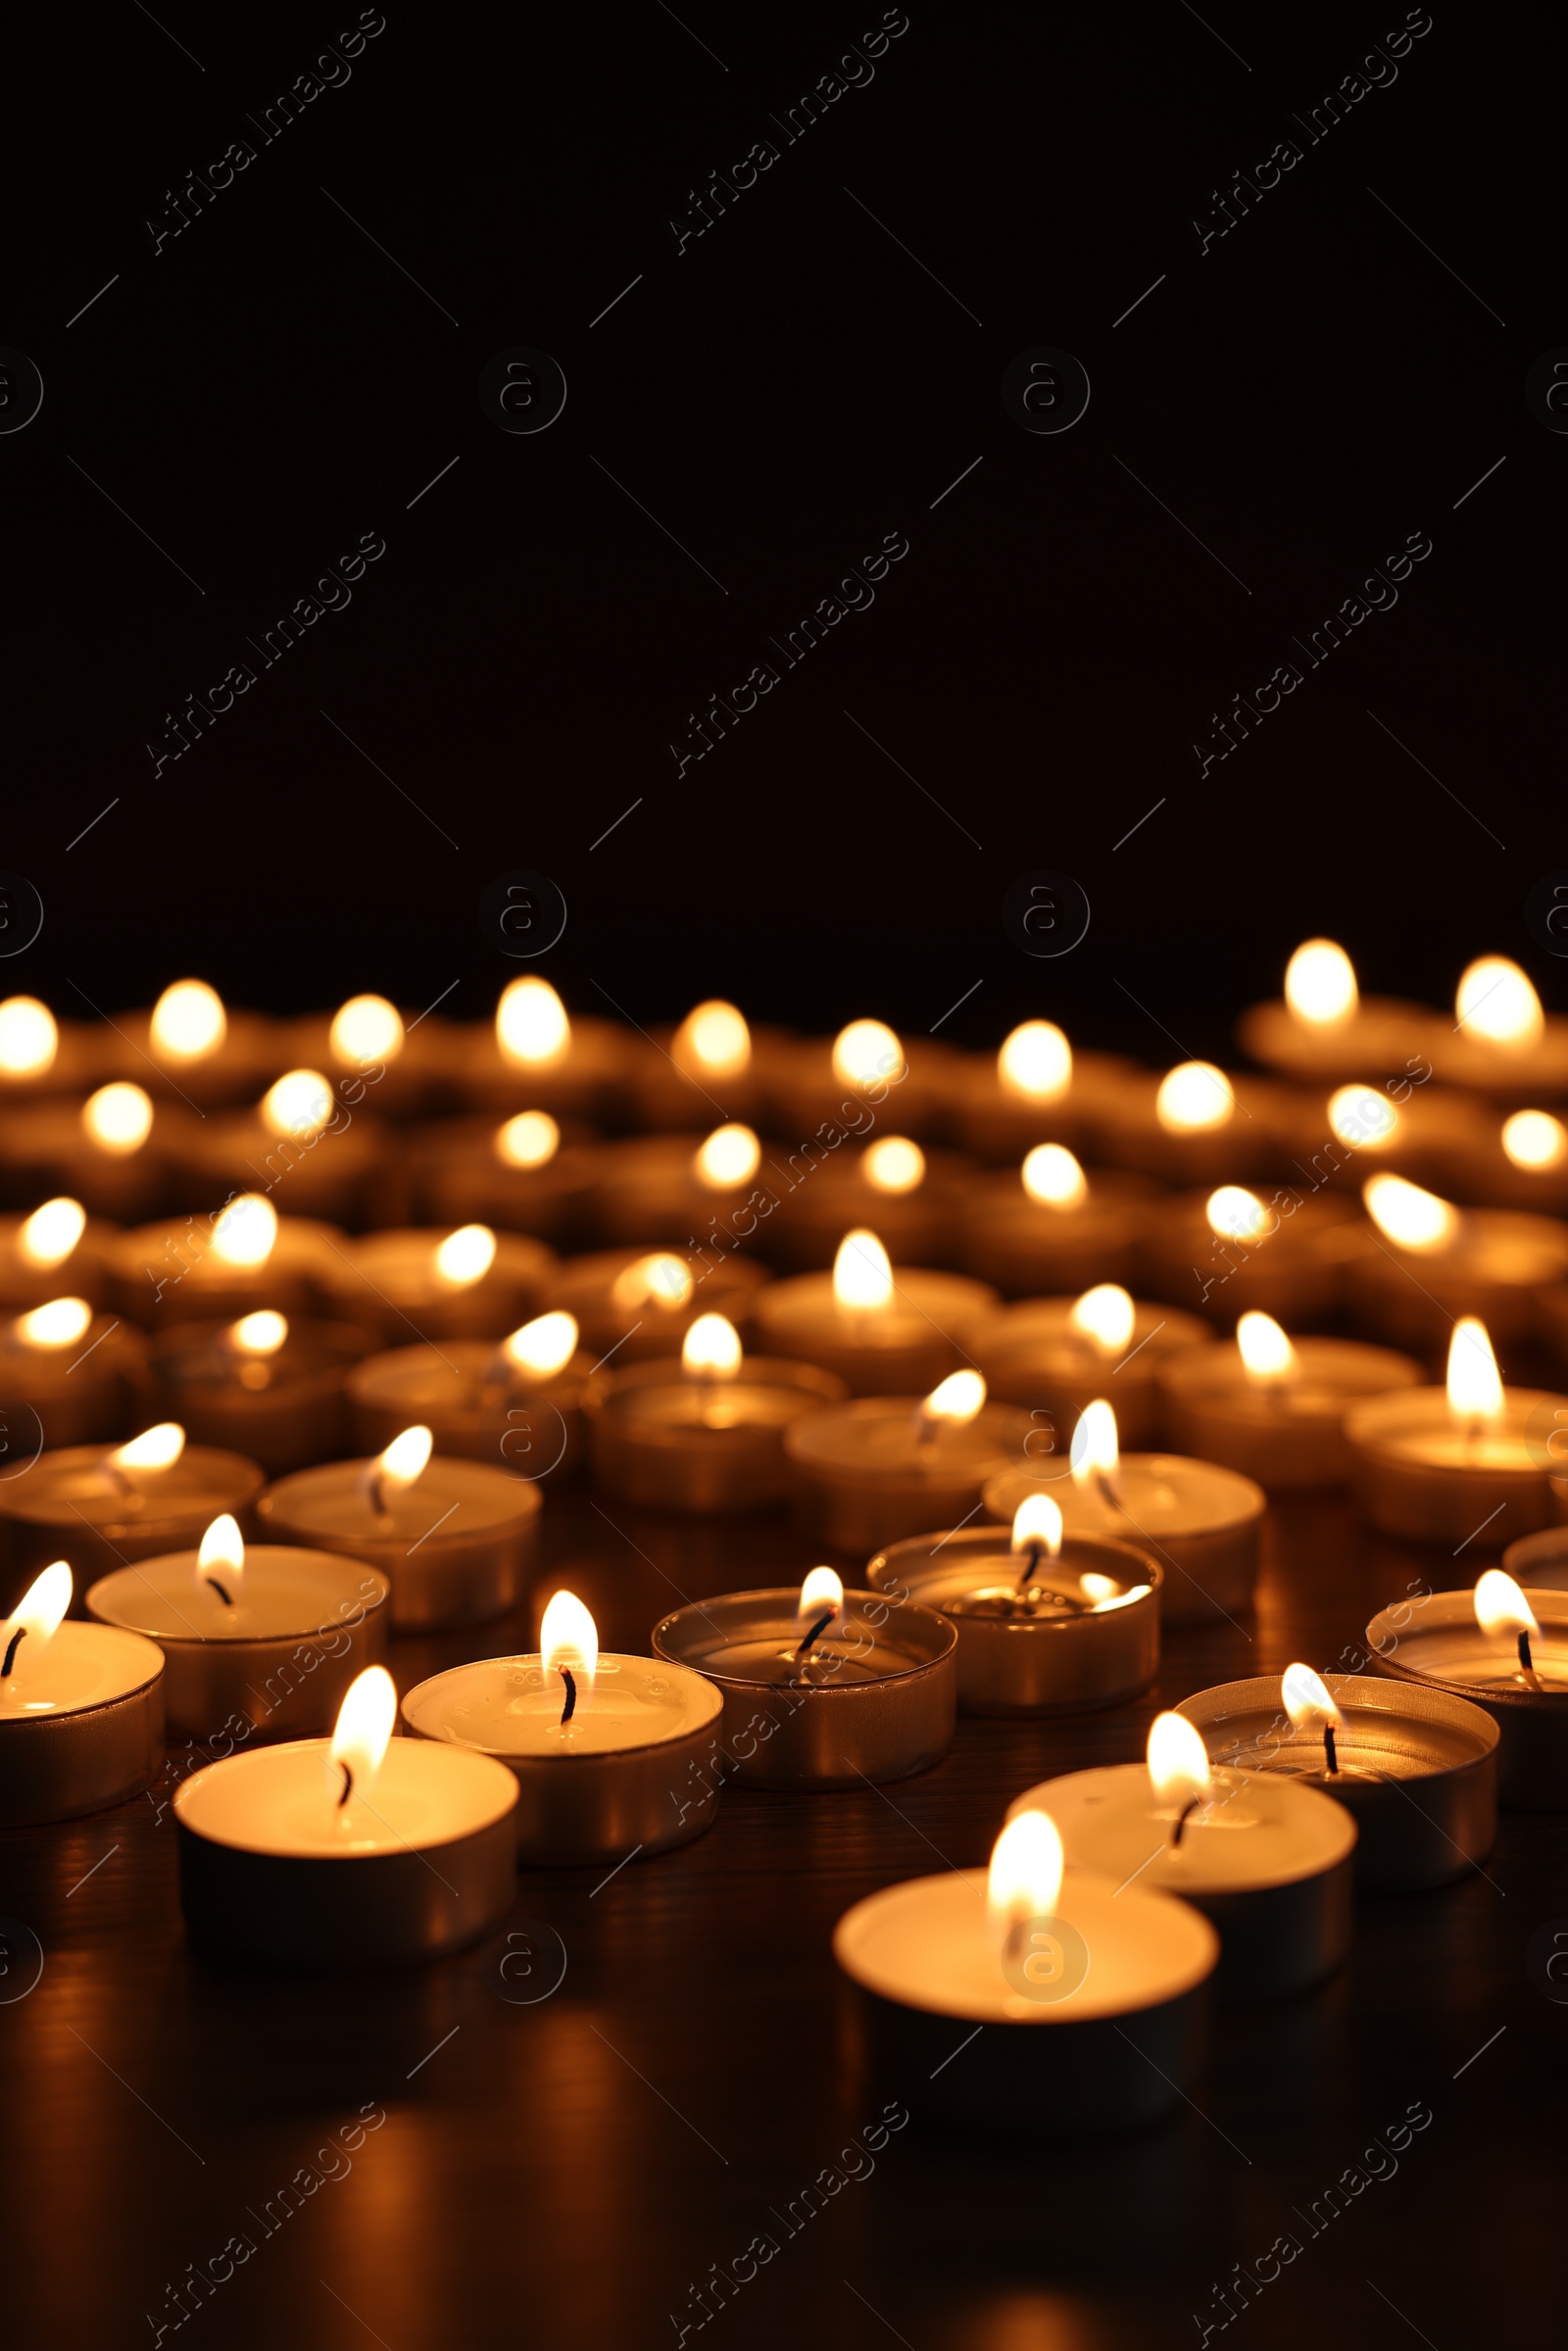 Photo of Burning candles on dark surface against black background